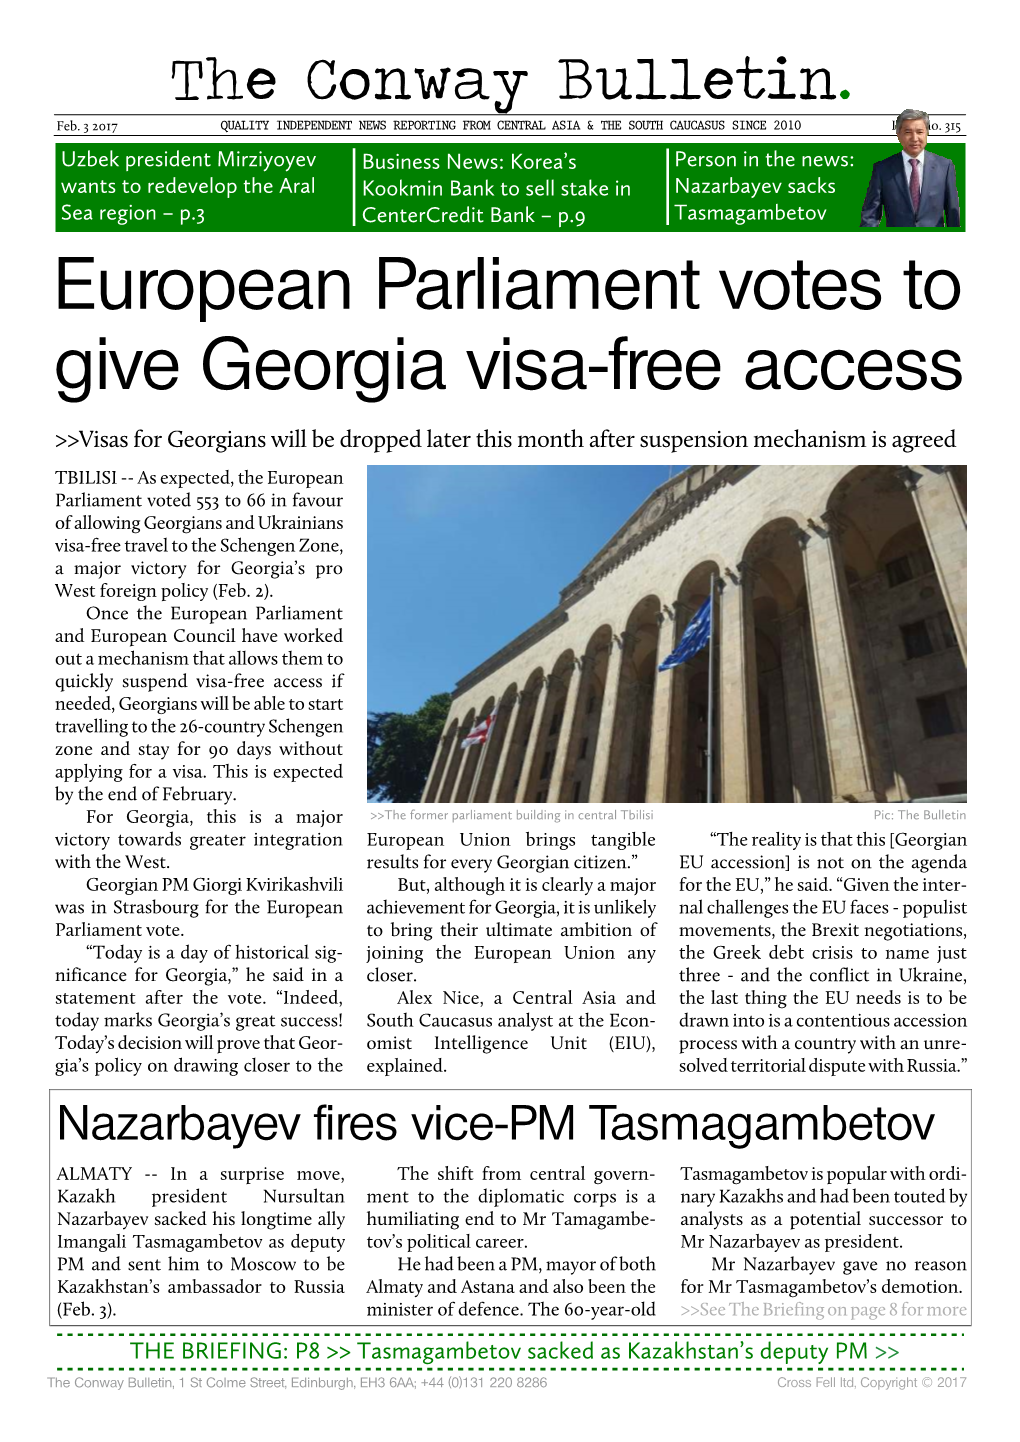 European Parliament Votes to Give Georgia Visa-Free Access